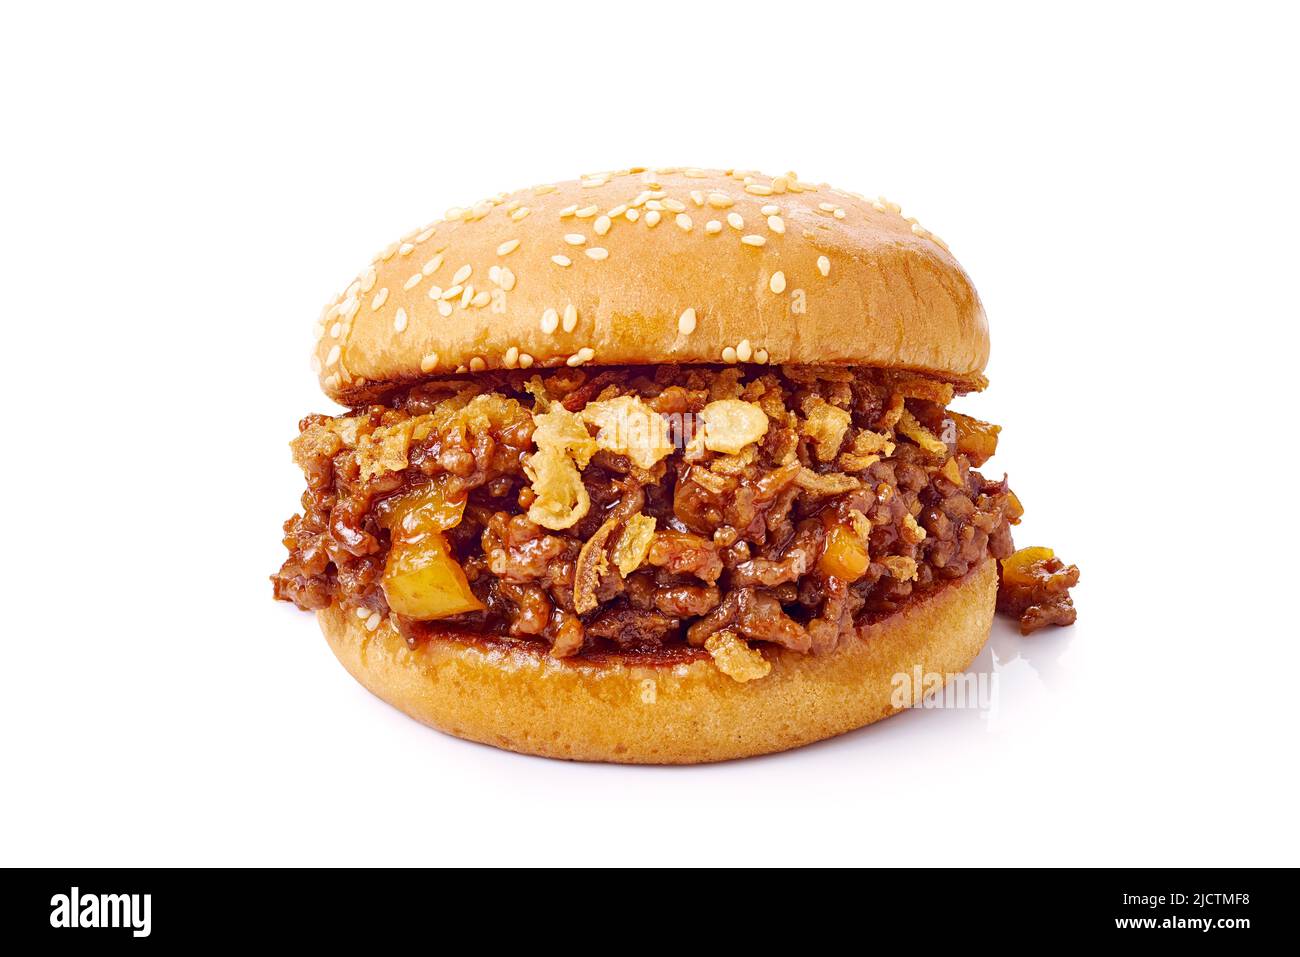 Sloppy joe sandwich with ground beef on white background Stock Photo